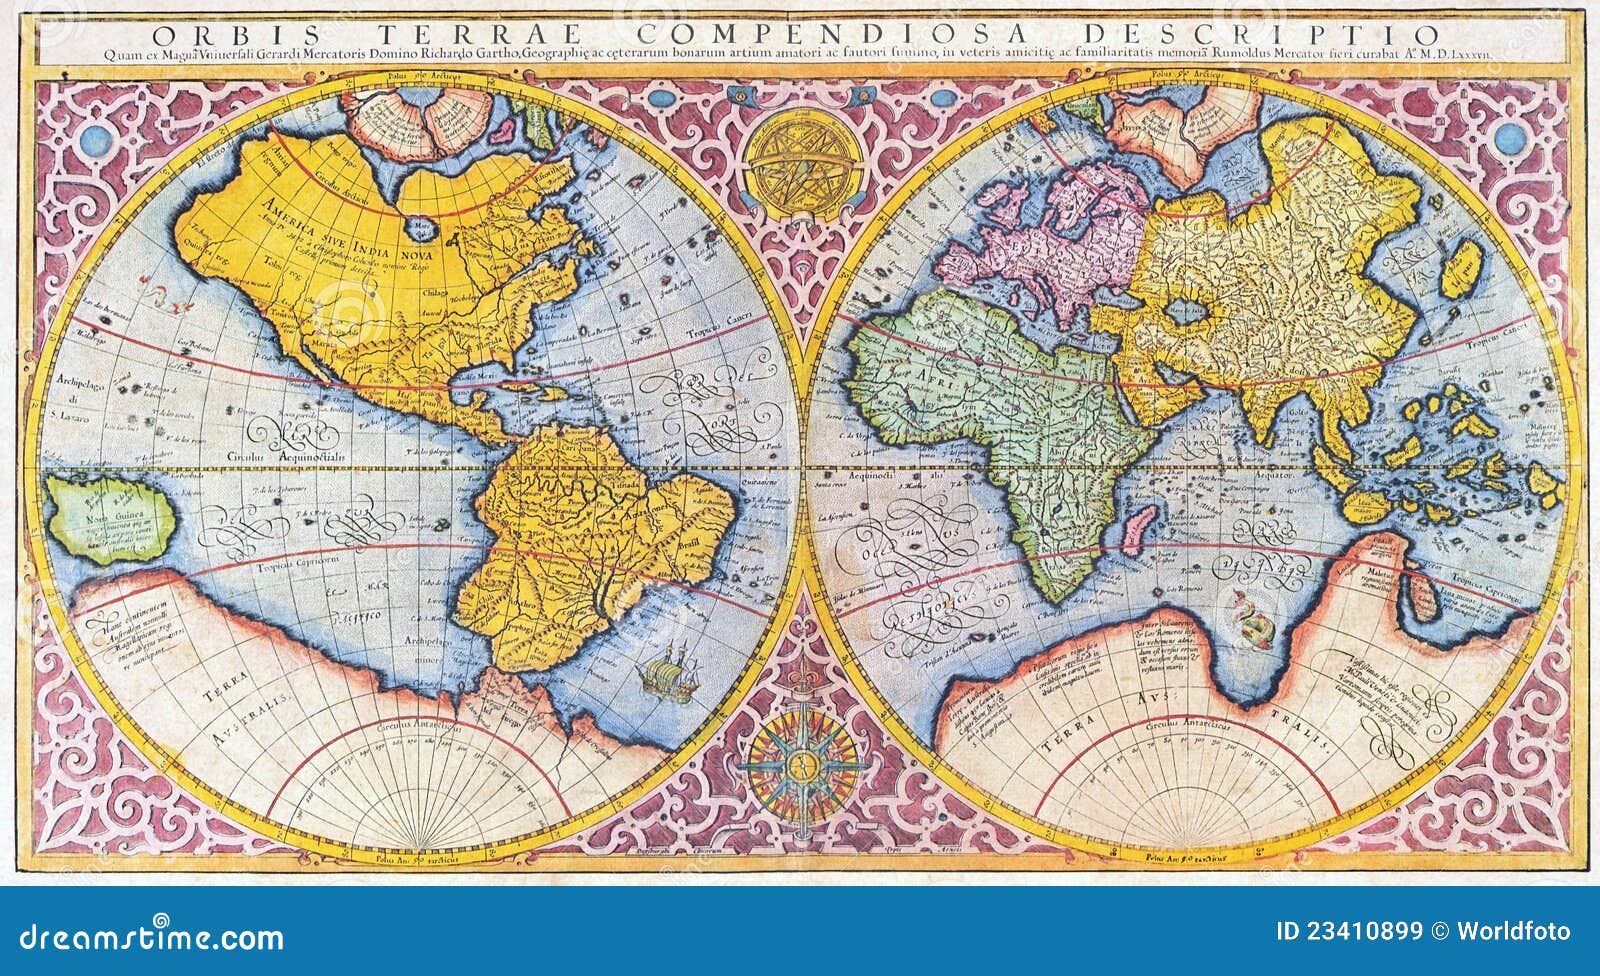 16th century world map